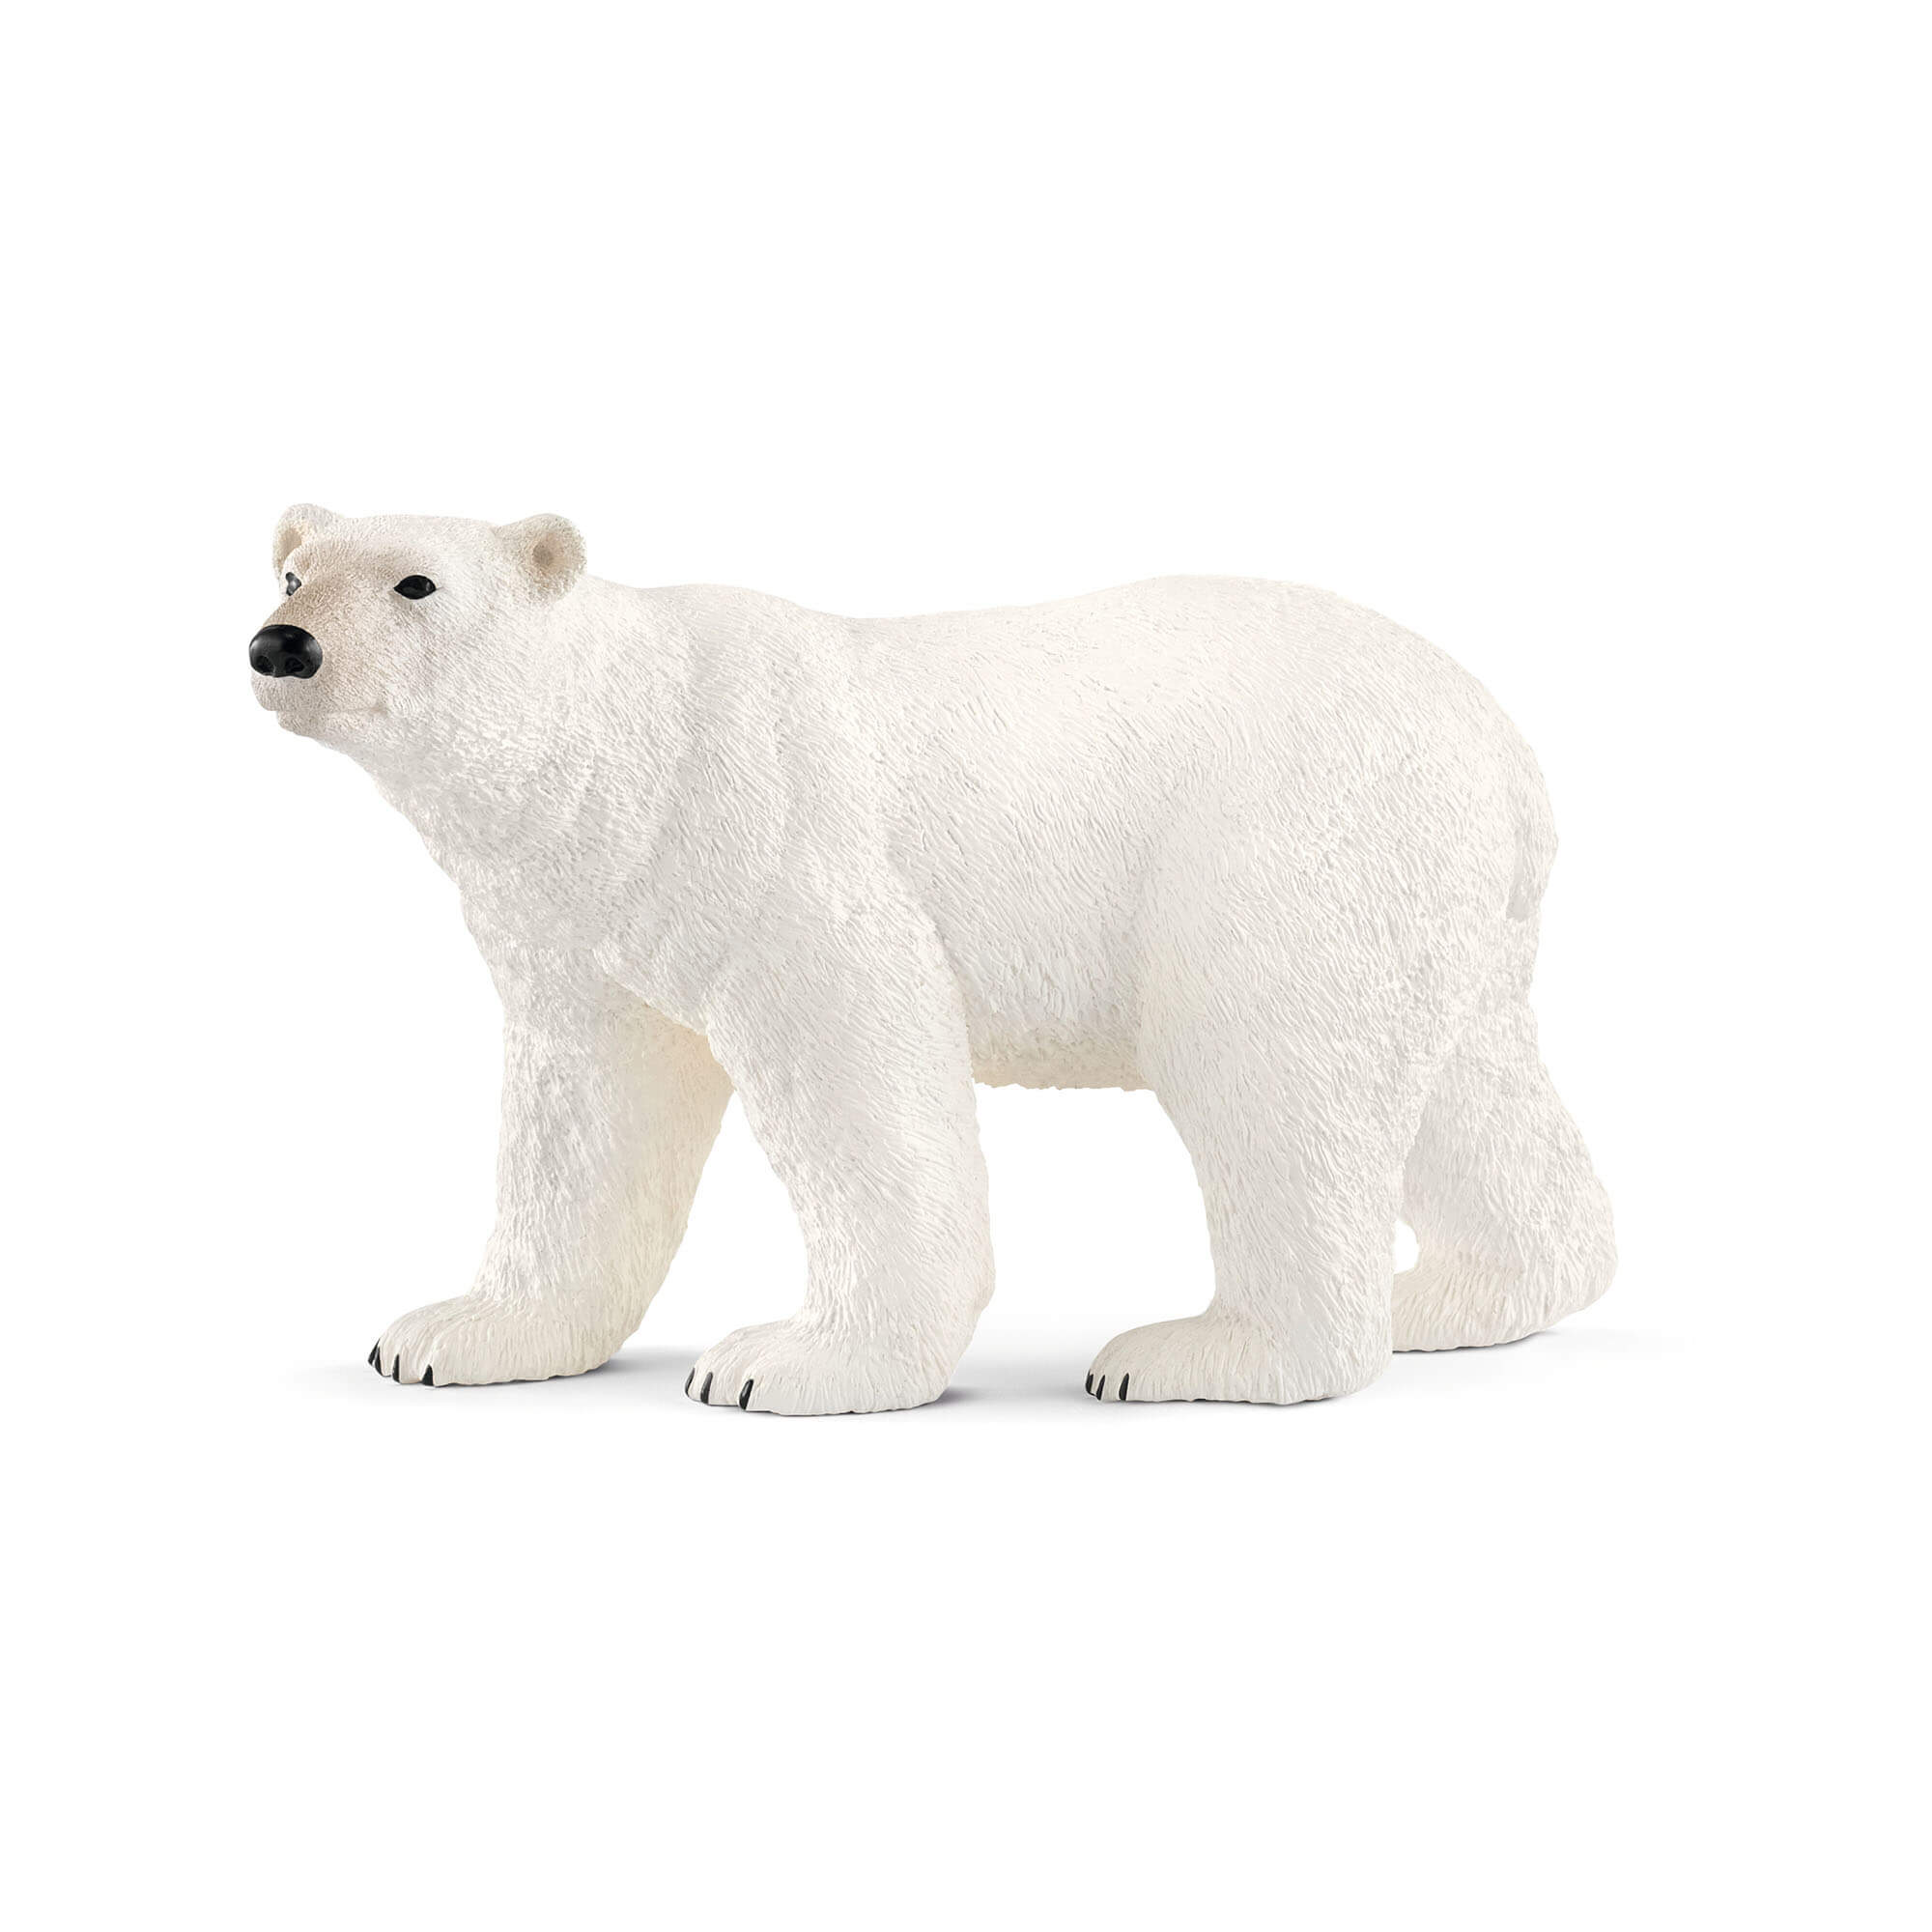 Schleich Wild Life Polar Bear Animal Figure